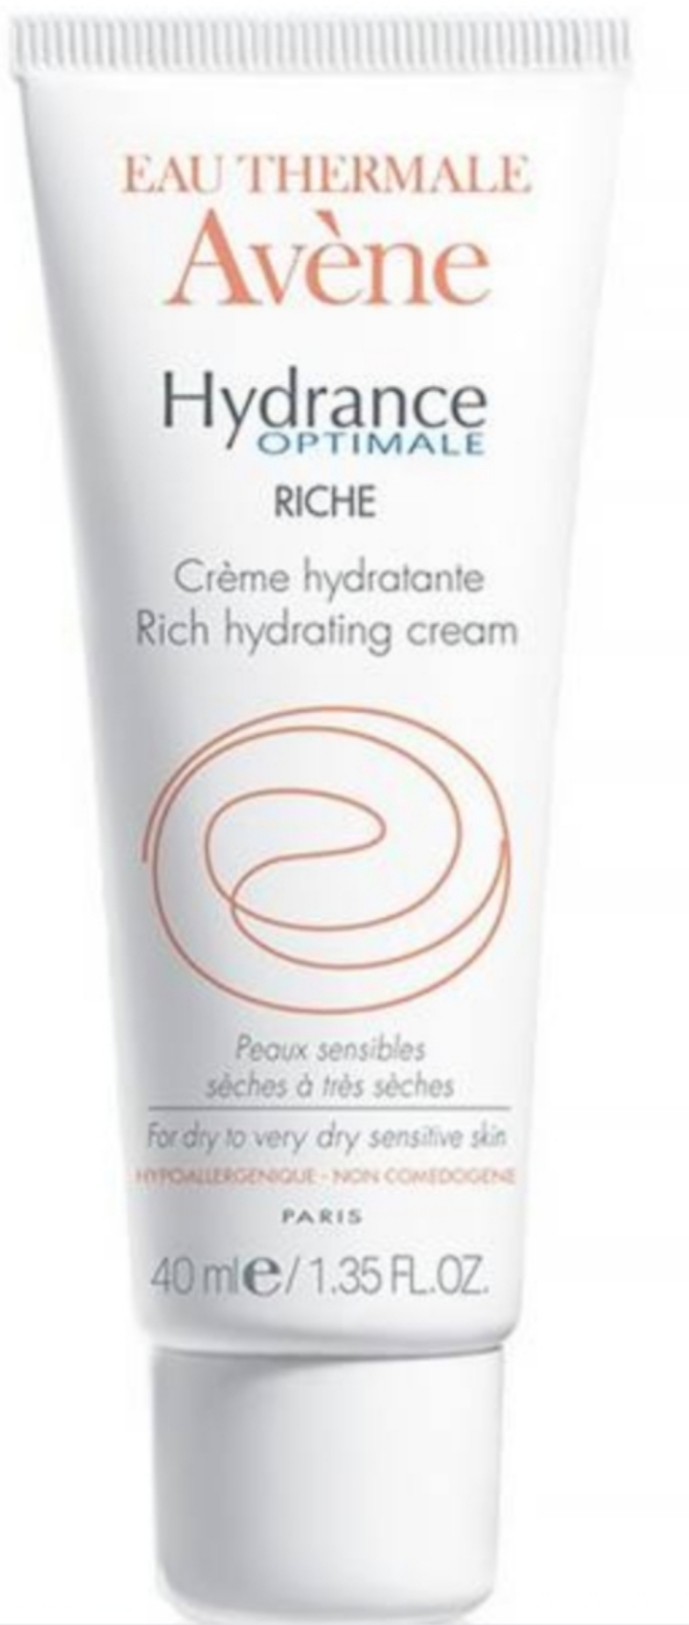 کرمها ، امولسیونها ، لوسیونها ، ژلها و روغنها برای پوست (دست ، صورت ، پا و...)AVENE Hydrance Optimal Rich Cream for Dry to Very Dry Sensitive Skin (Hydrance Optimale Rich)